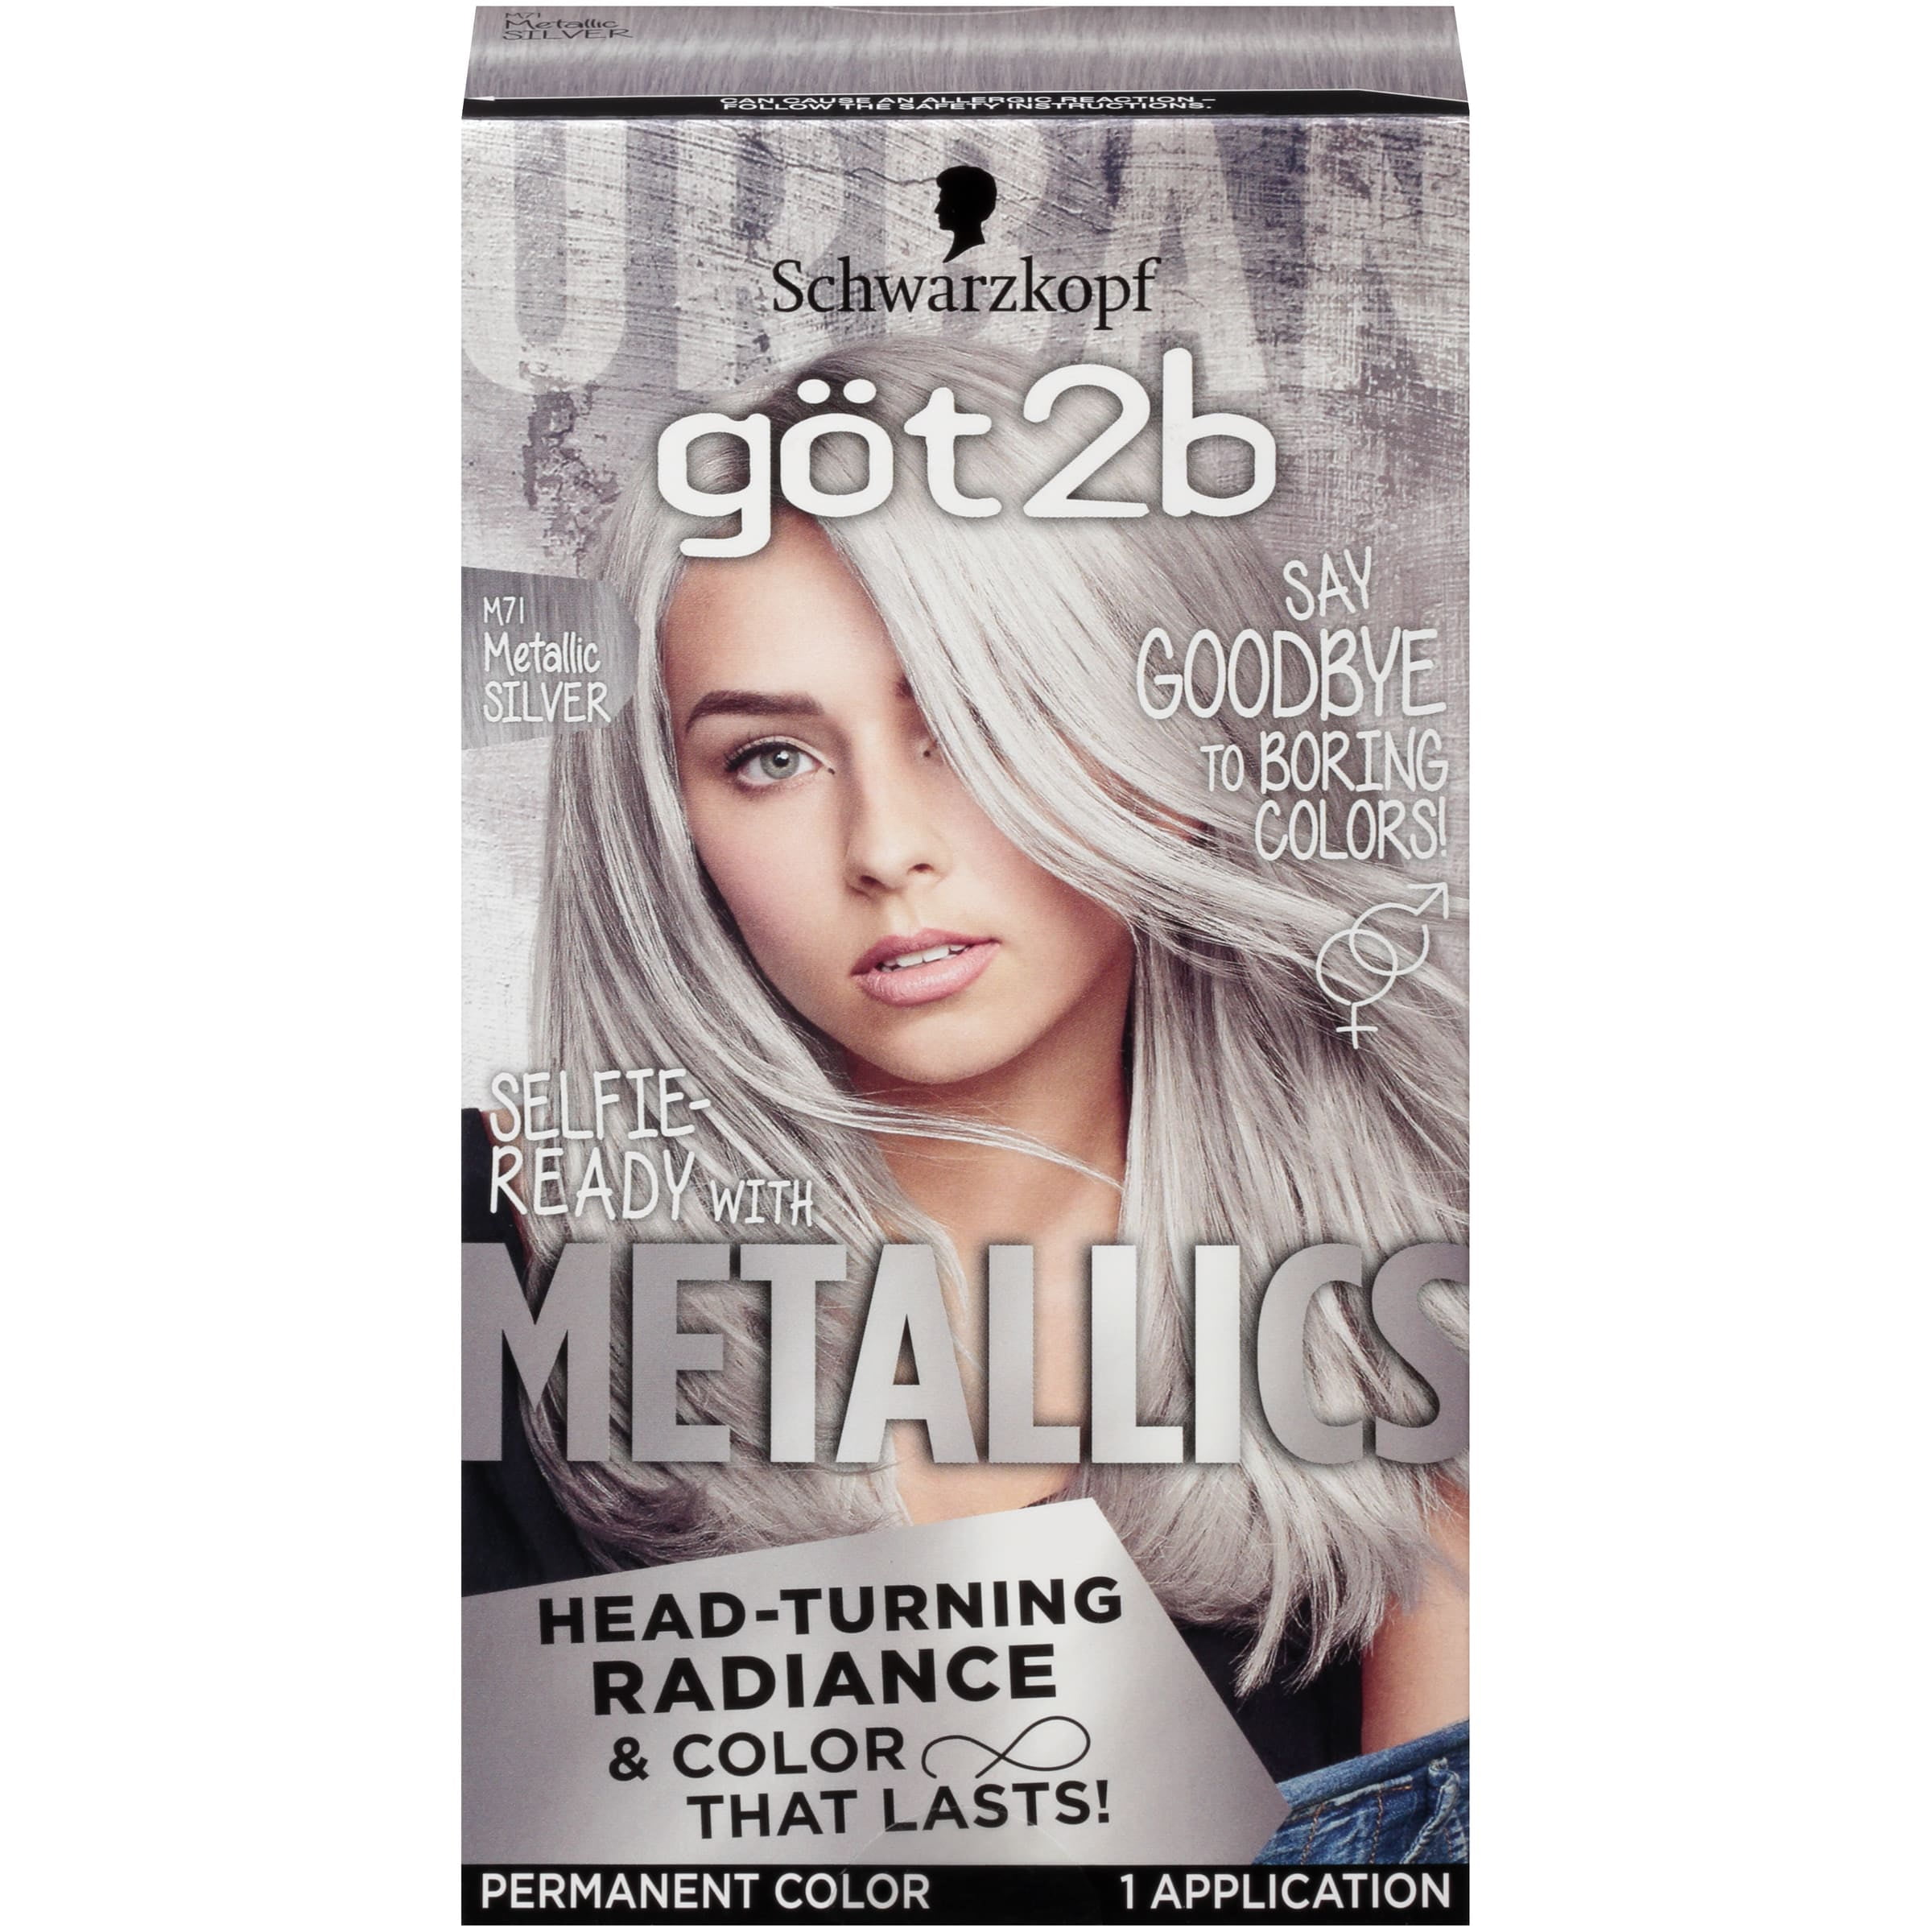 Schwarzkopf Got2b Metallics Permanent Hair Color, M71 Metallics Silver -  